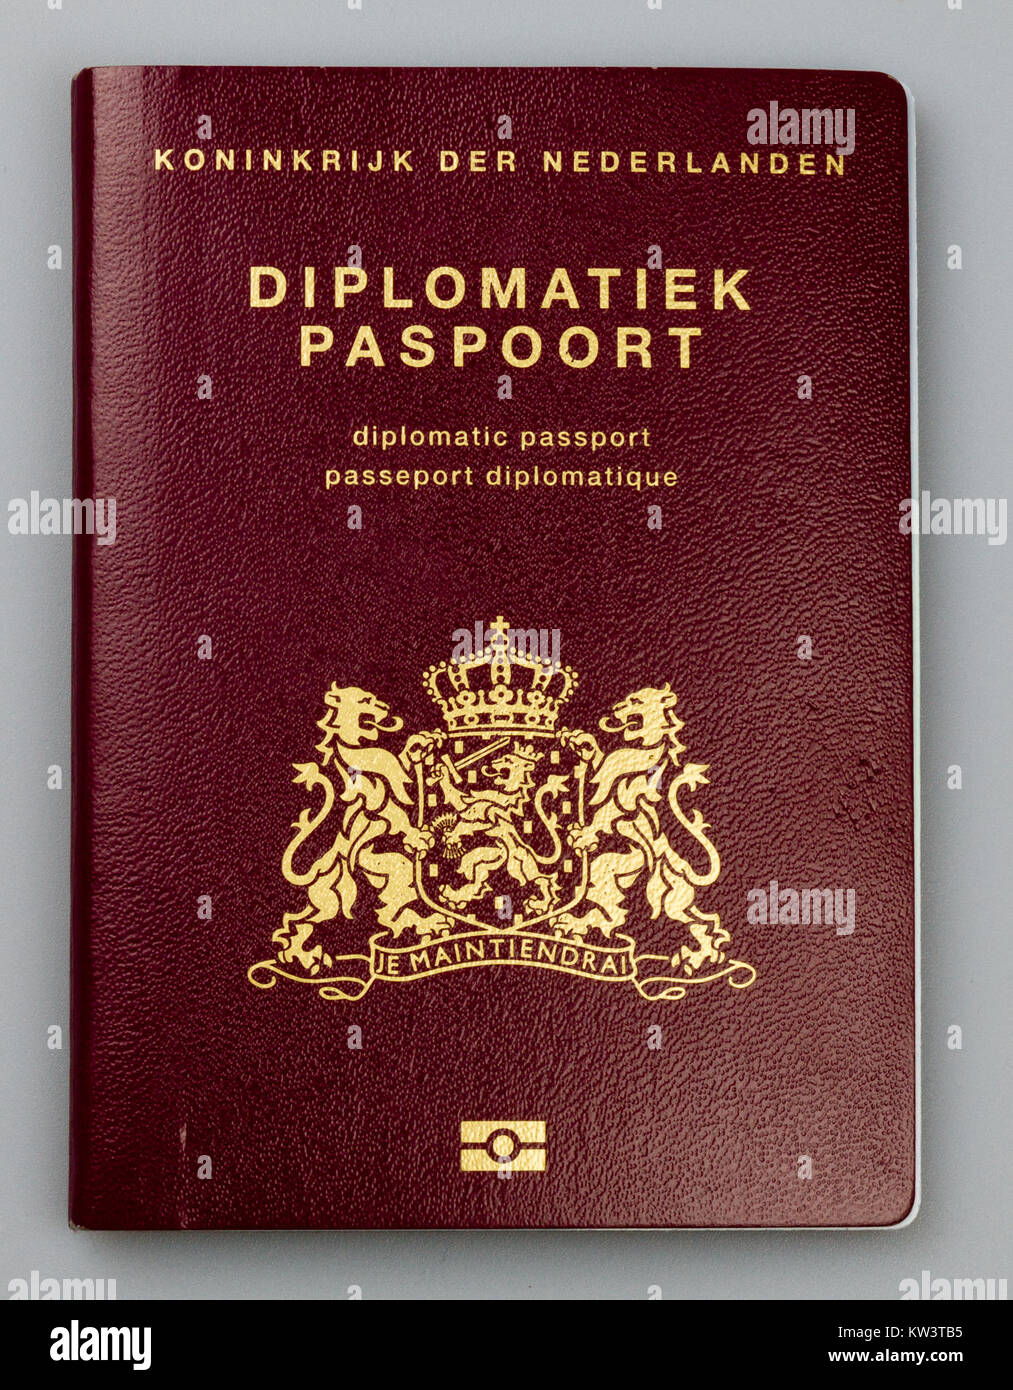 NL passeport diplomatique Photo Stock - Alamy